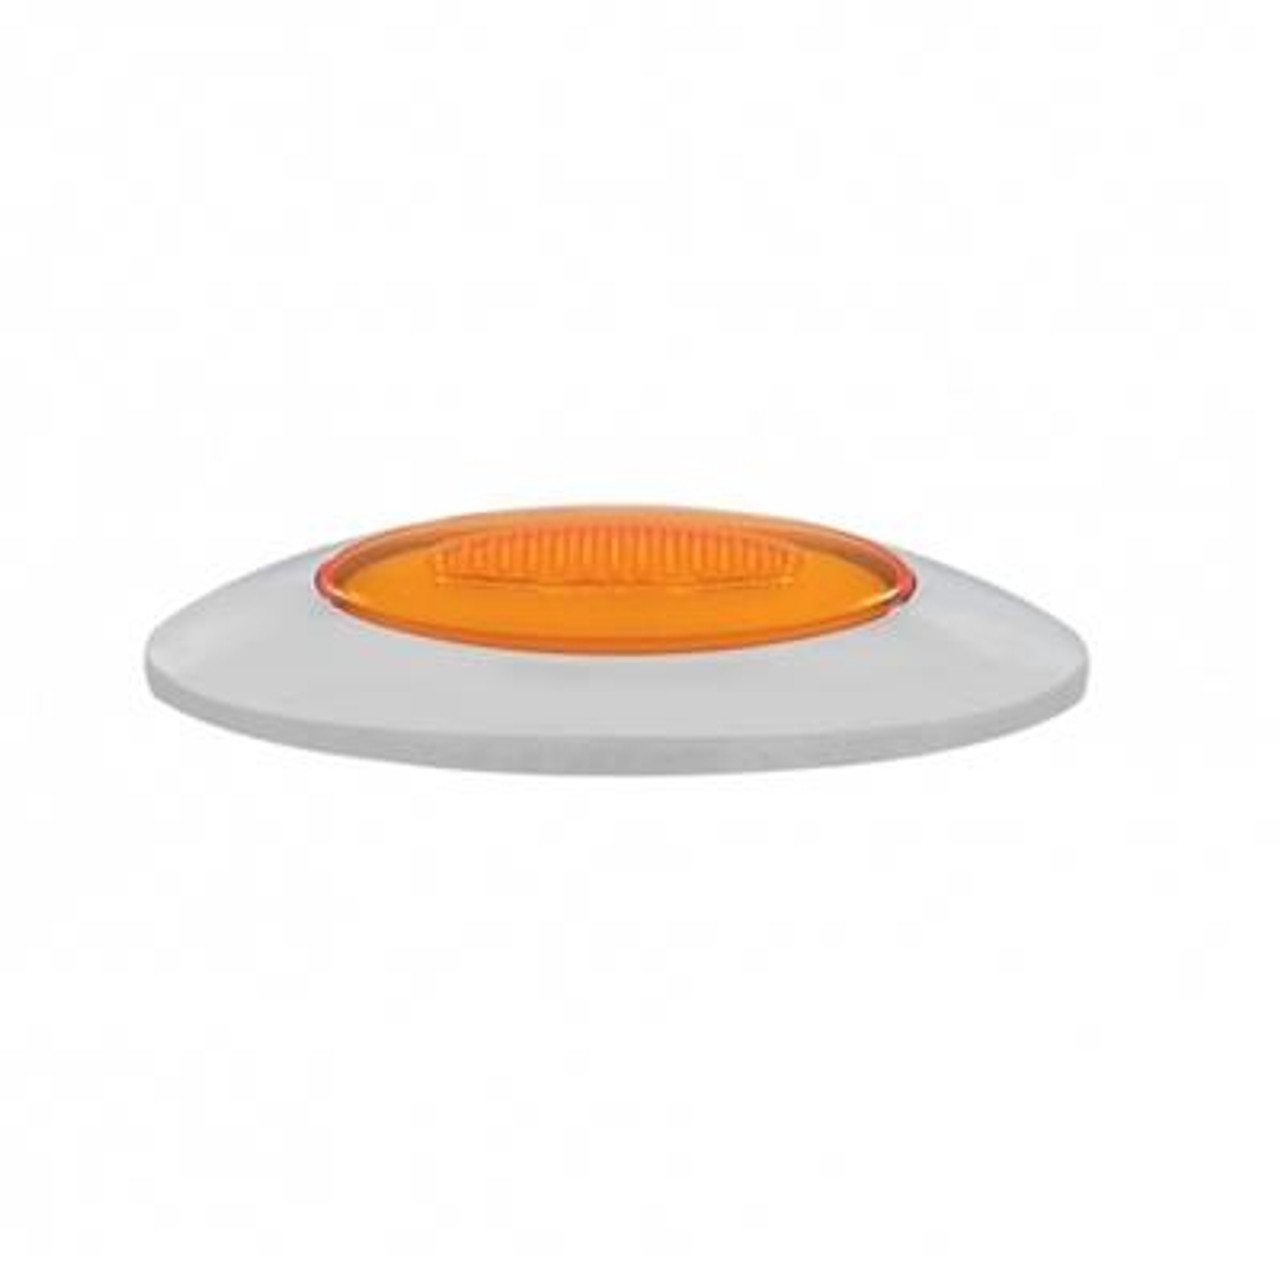 6 LED M5 Millennium GloLight (Clearance/Marker) - Amber LED/Amber Lens